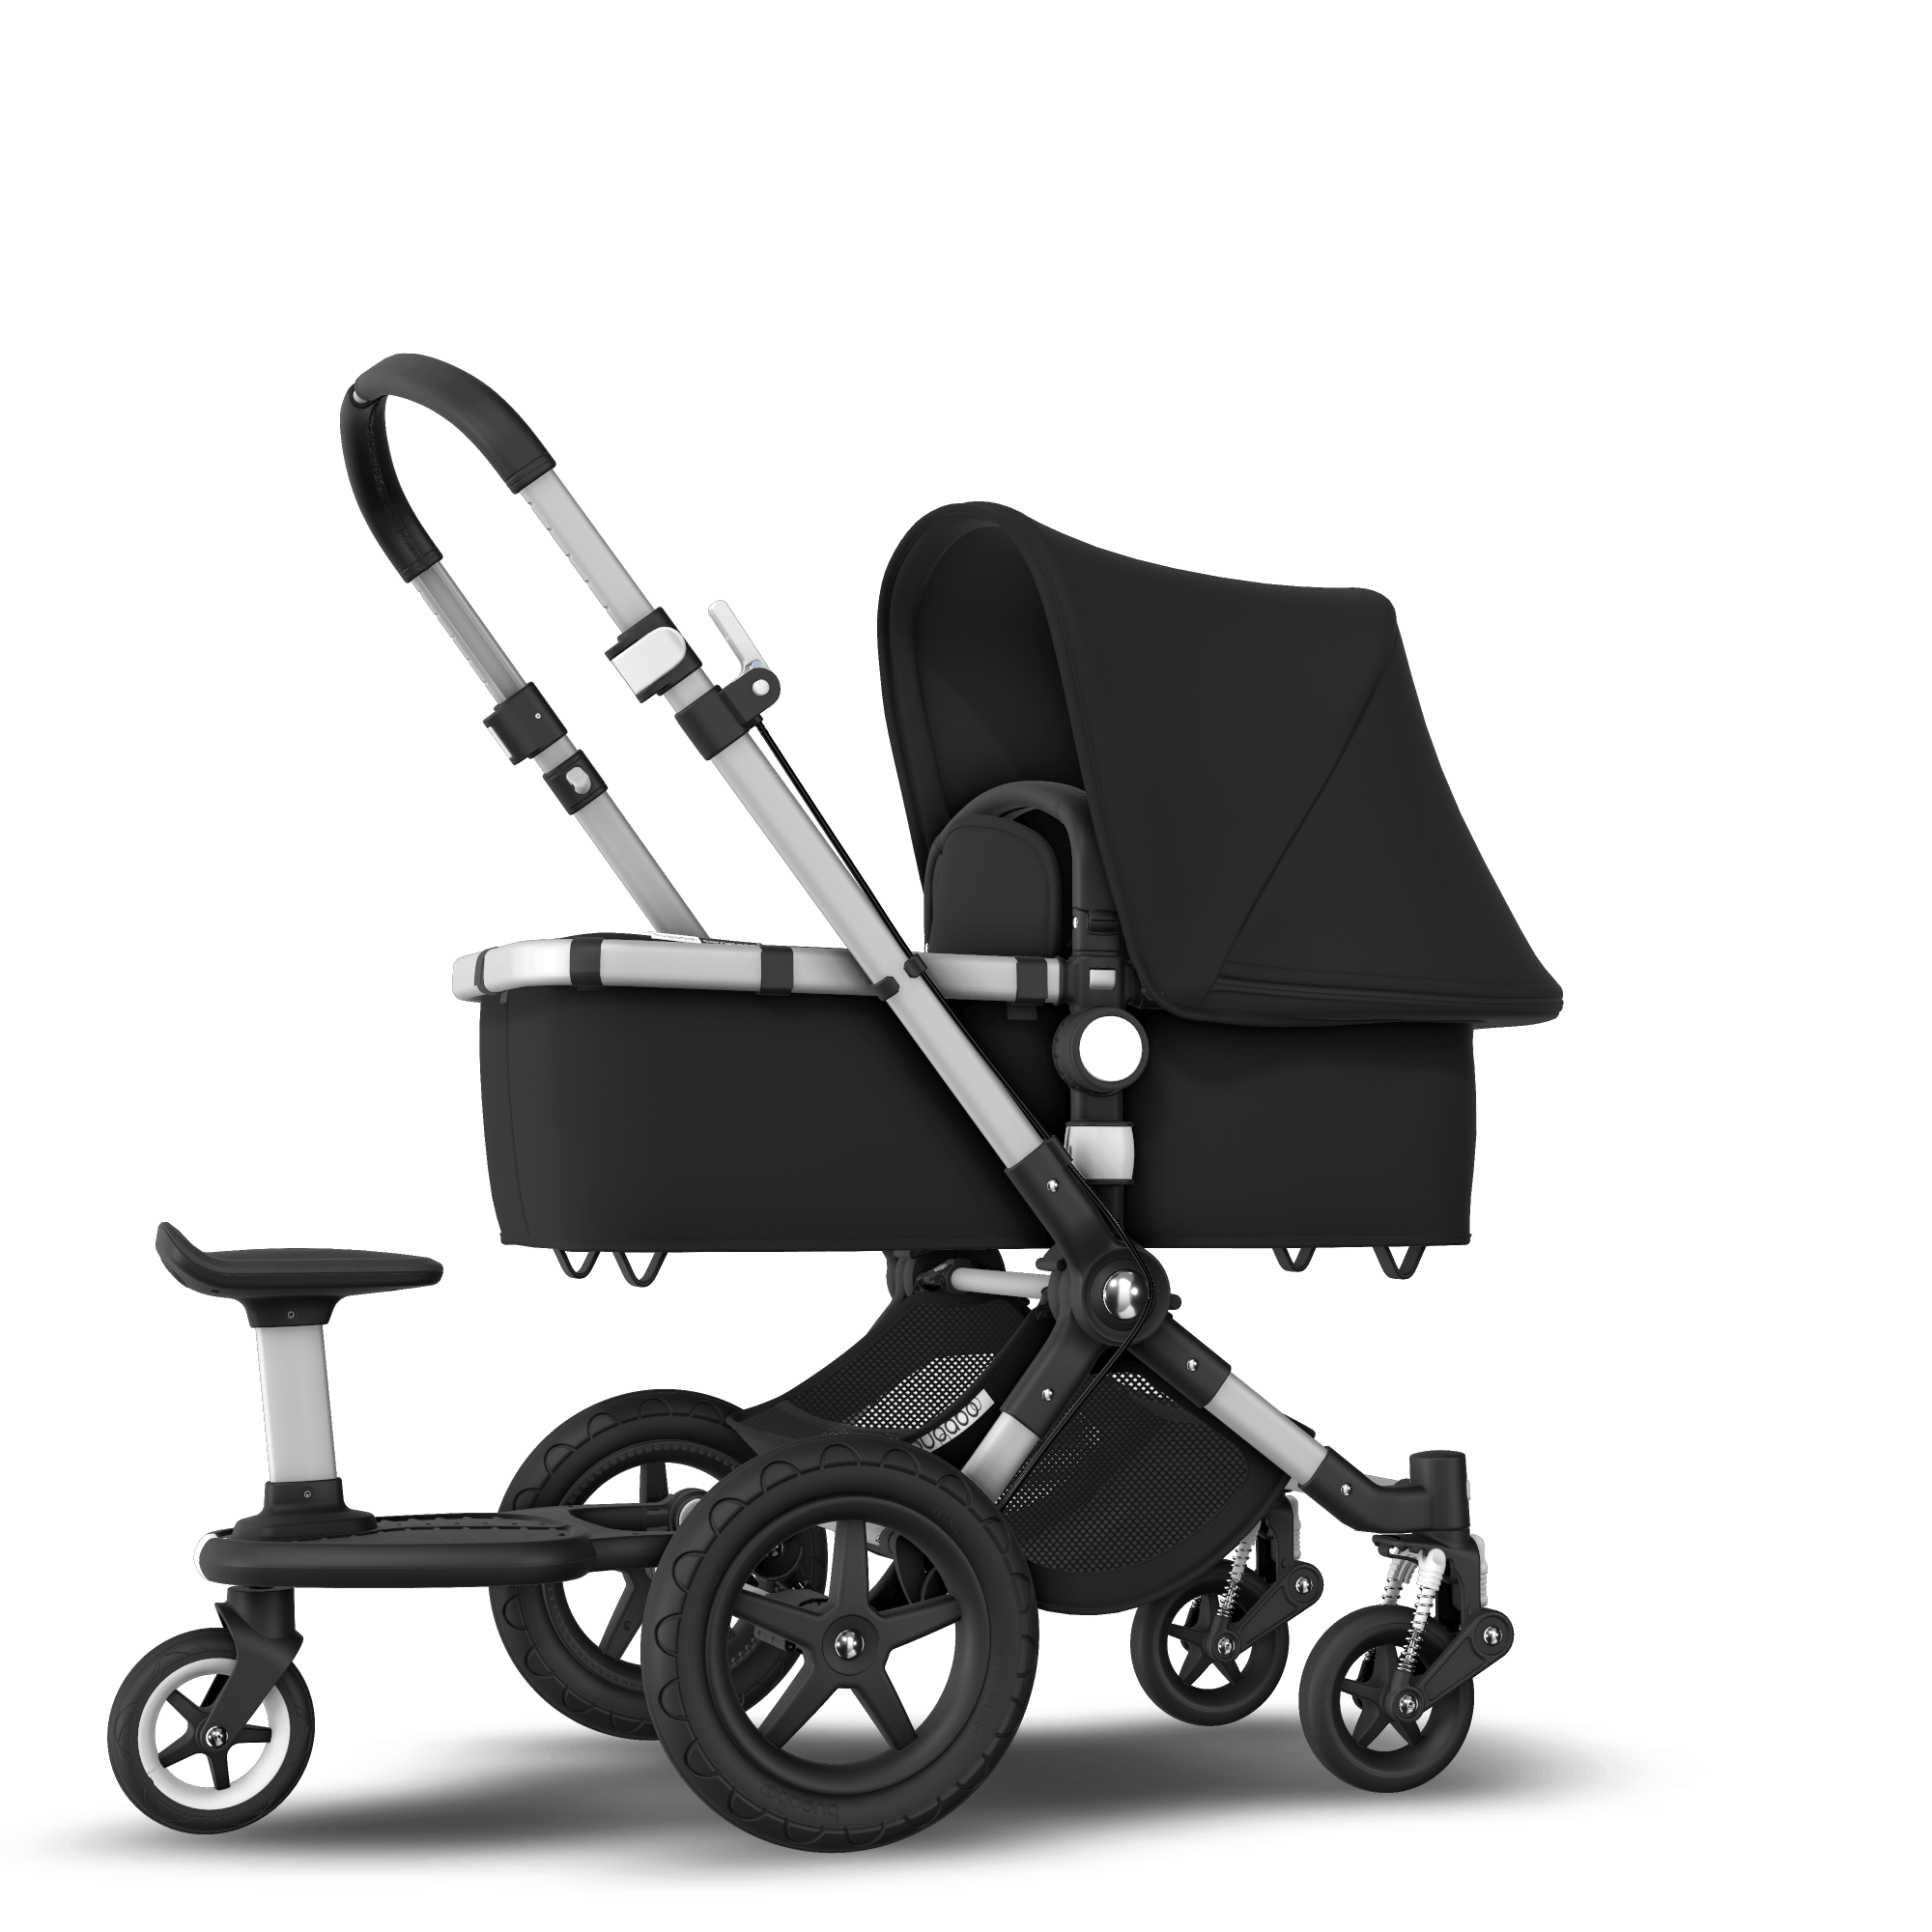 Aubergine Geslaagd Zenuw Bugaboo Cameleon 3 Plus Sit and stand stroller Black sun canopy, black  fabrics, aluminum chassis | Bugaboo